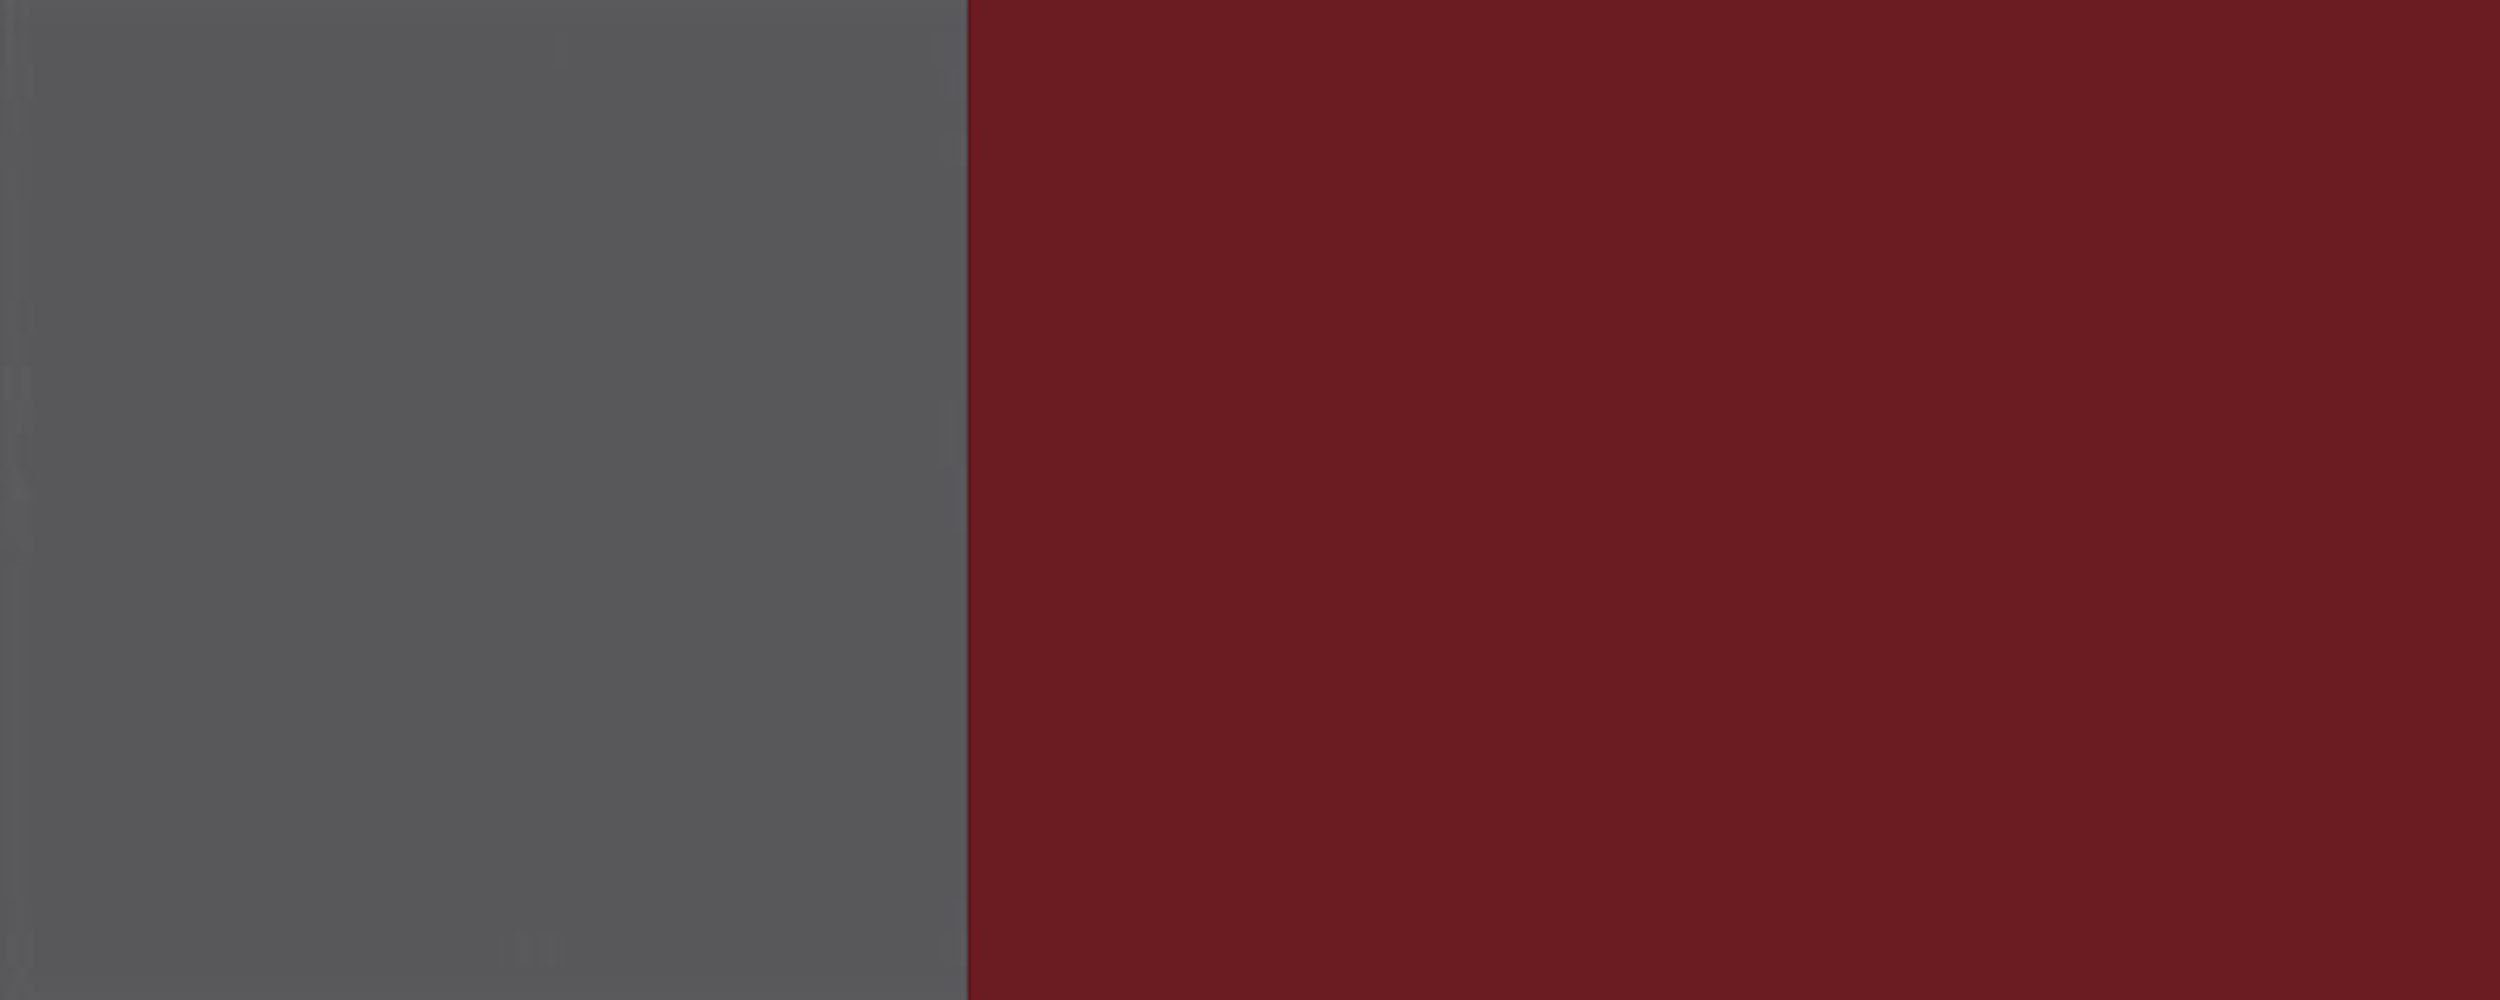 3004 Feldmann-Wohnen Front- 1-türig Korpusfarbe purpurrot matt wählbar Rimini RAL (Rimini) Hochschrank 60cm und